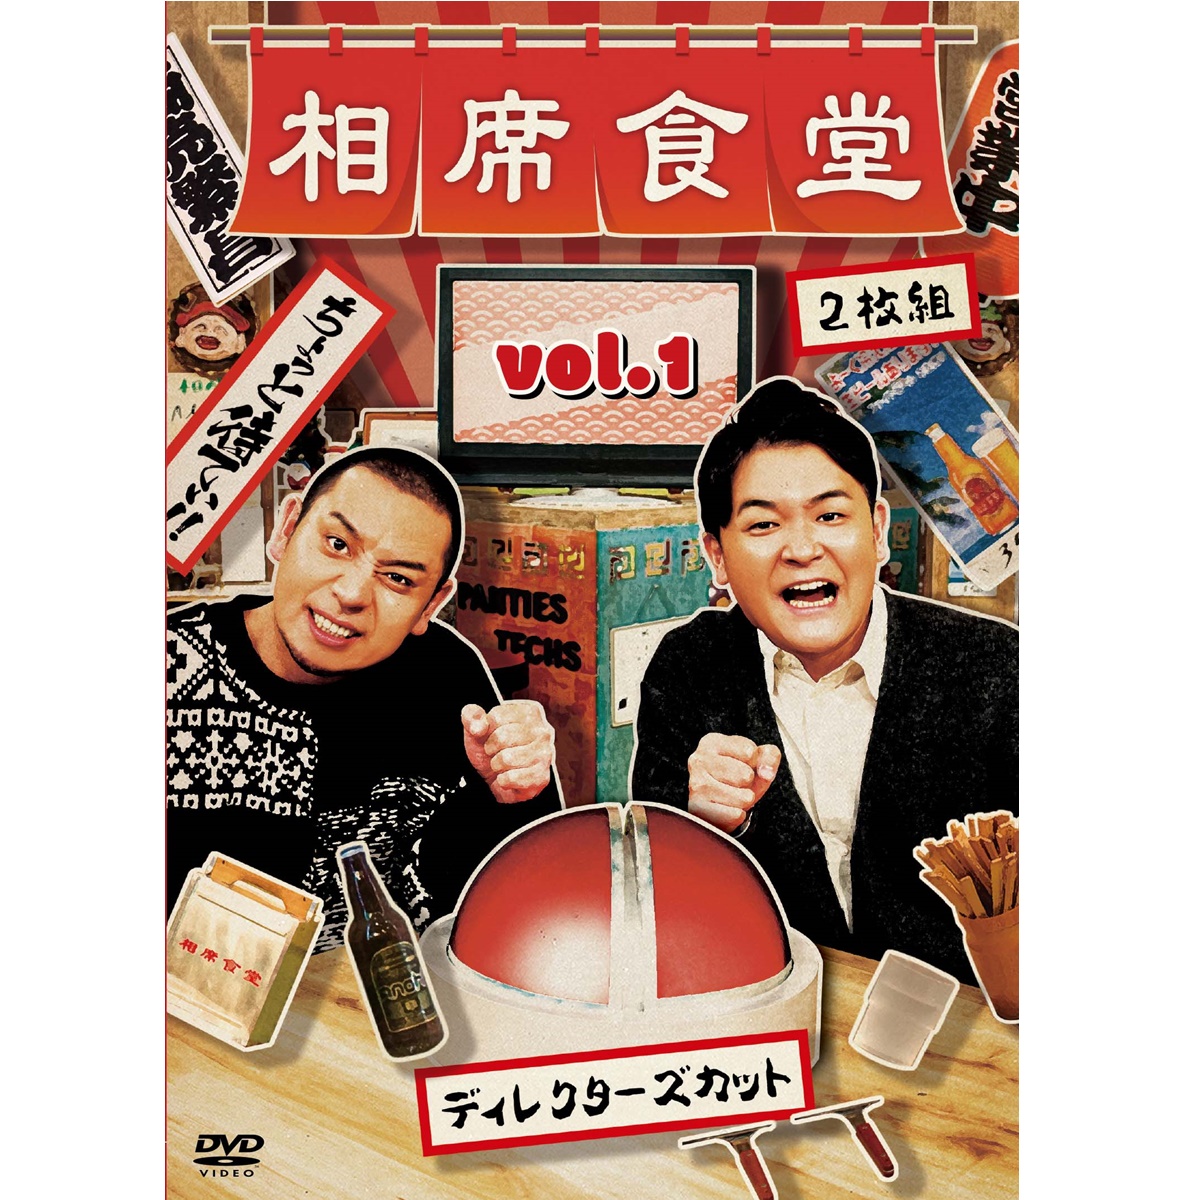 DVD「相席食堂 Vol.1～ディレクターズカット」通常版